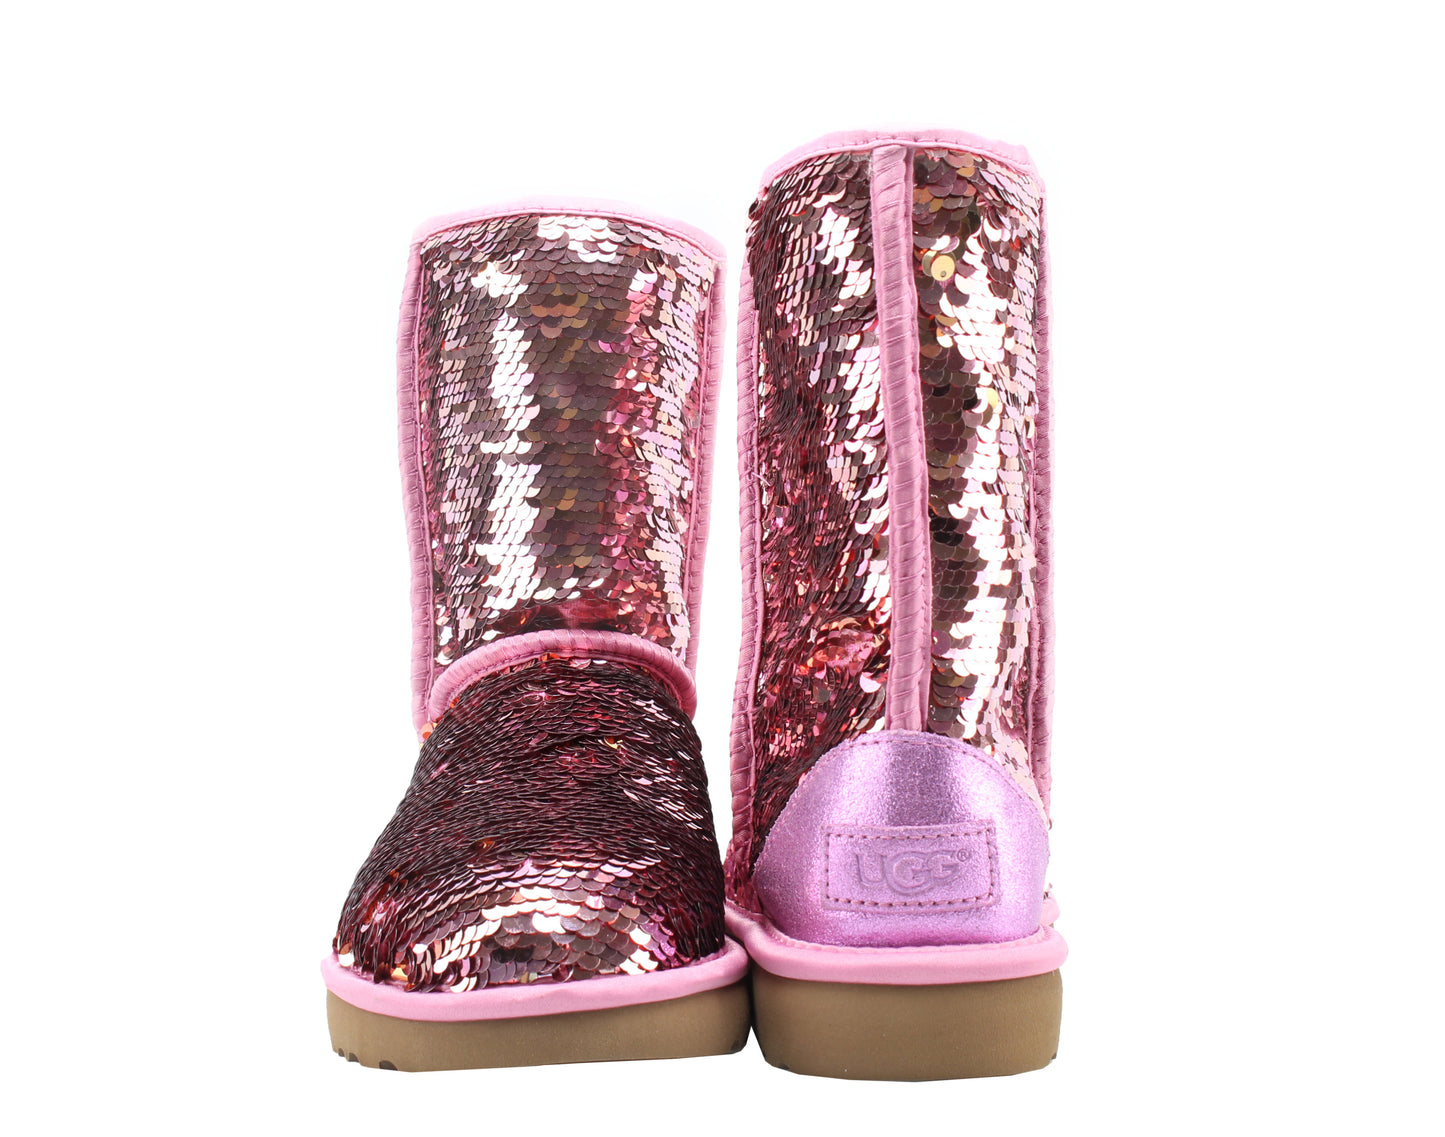 UGG Australia Classic Short Sequin Pink Women's Winter Boots 1094982-PINK